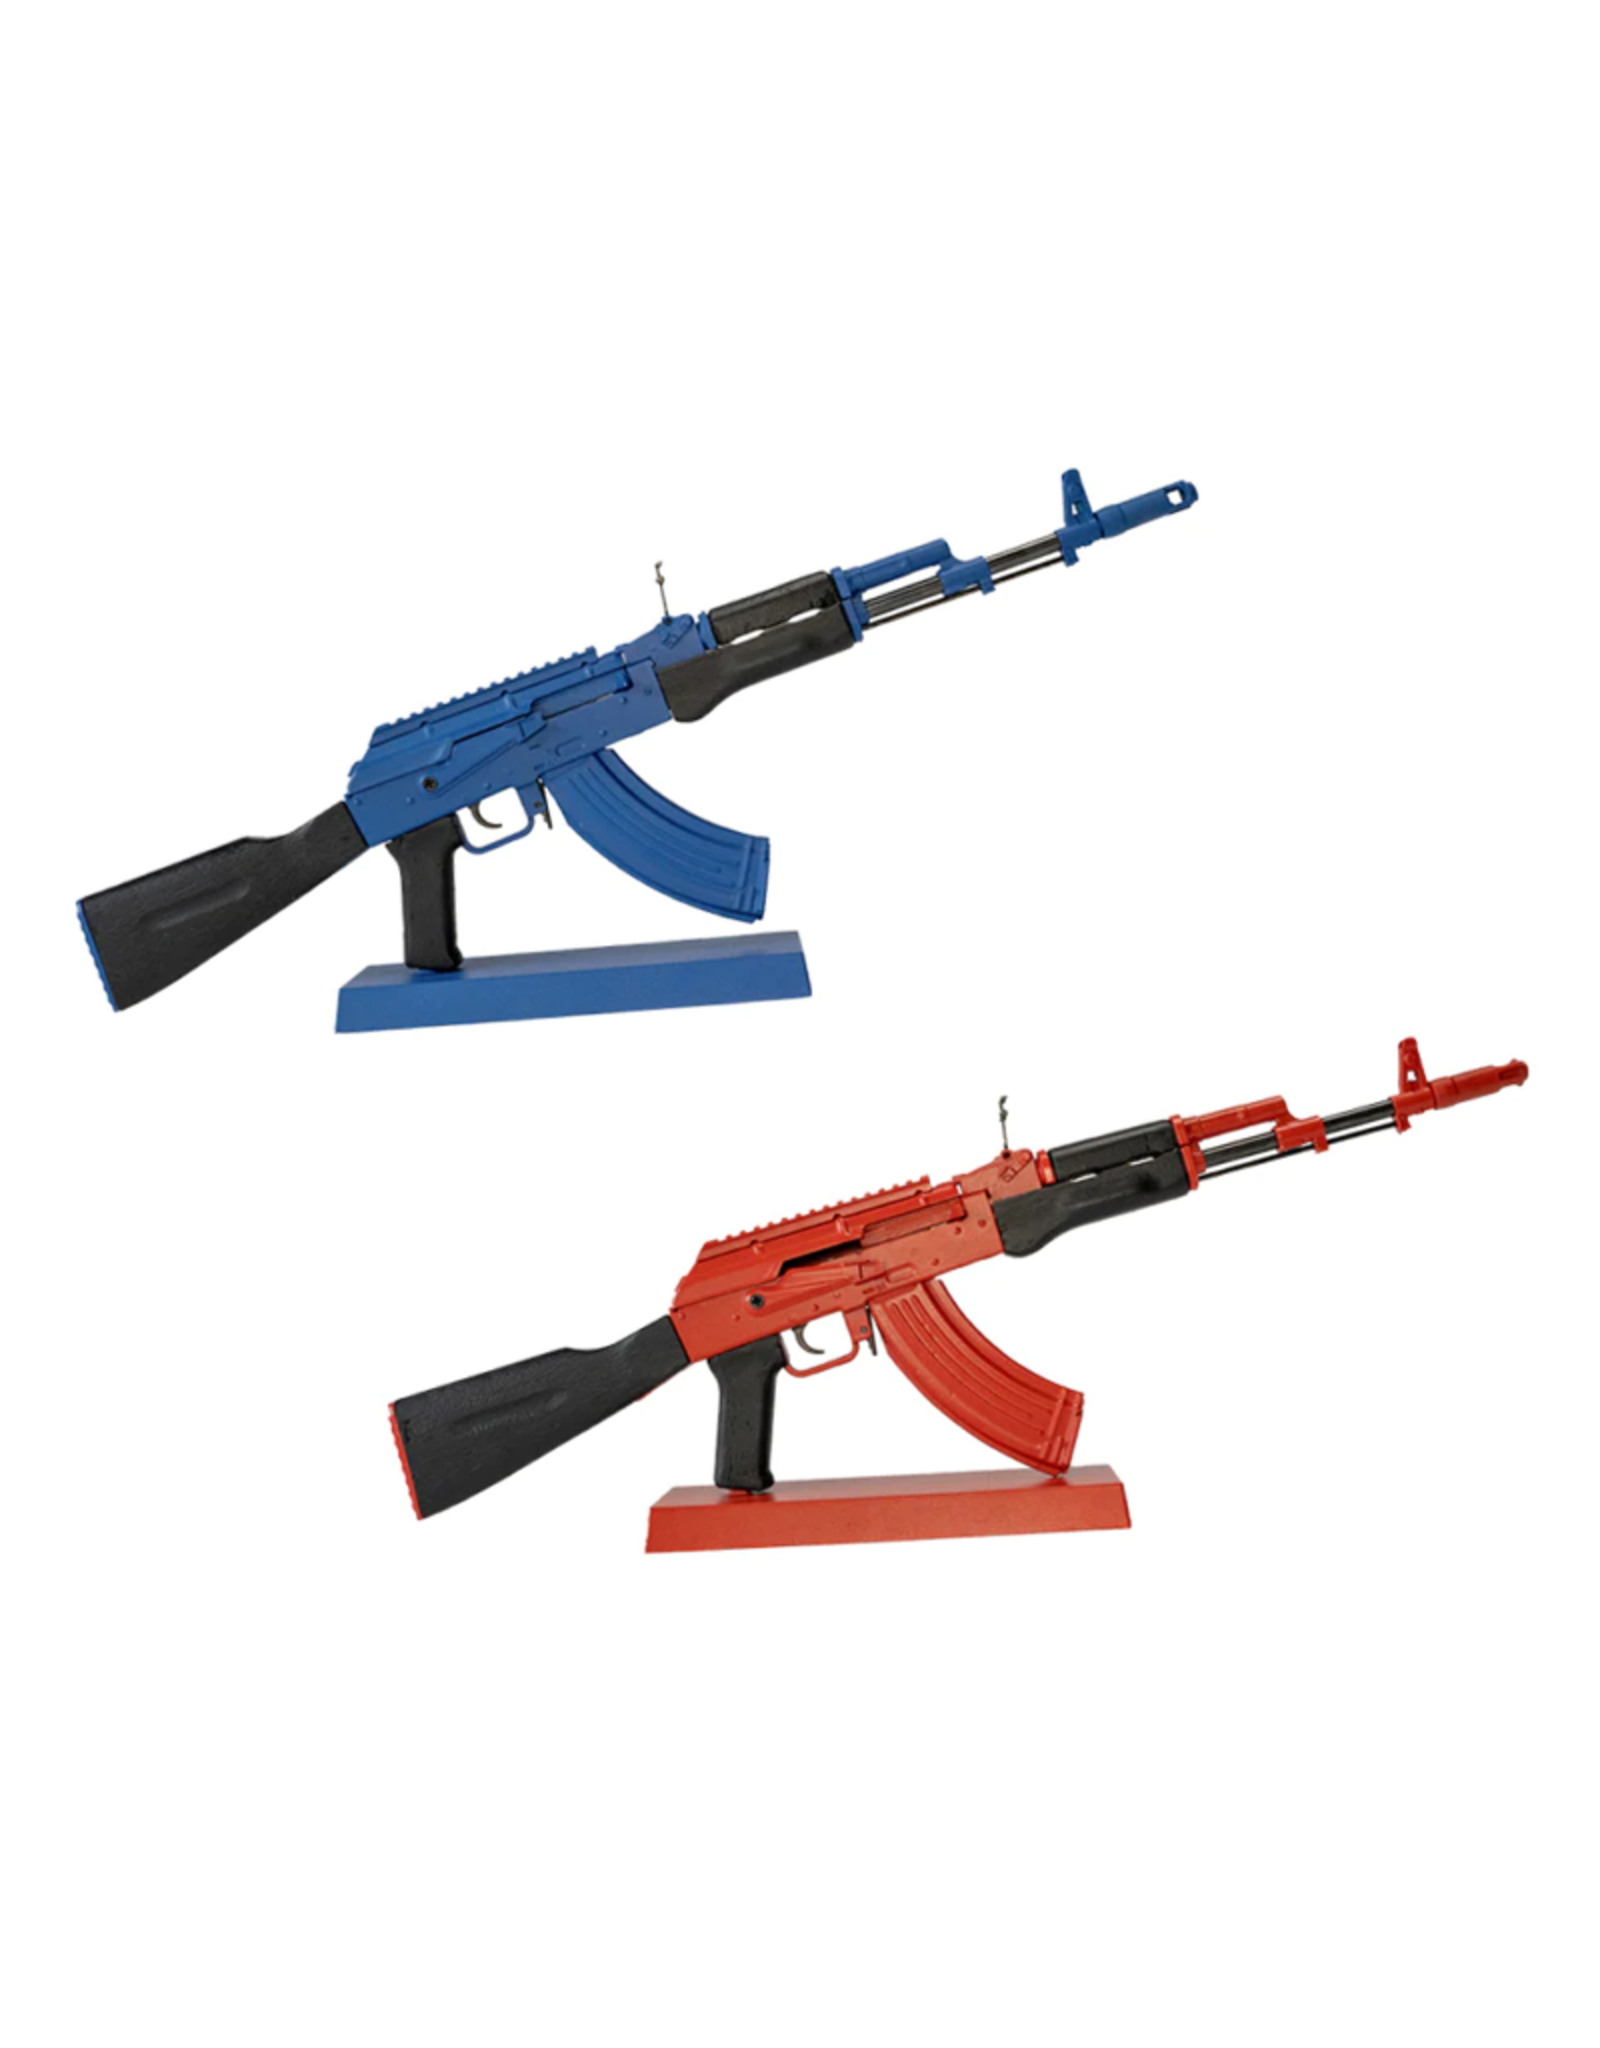 Goat Guns GG-VERSUS  Red vs Blue Set